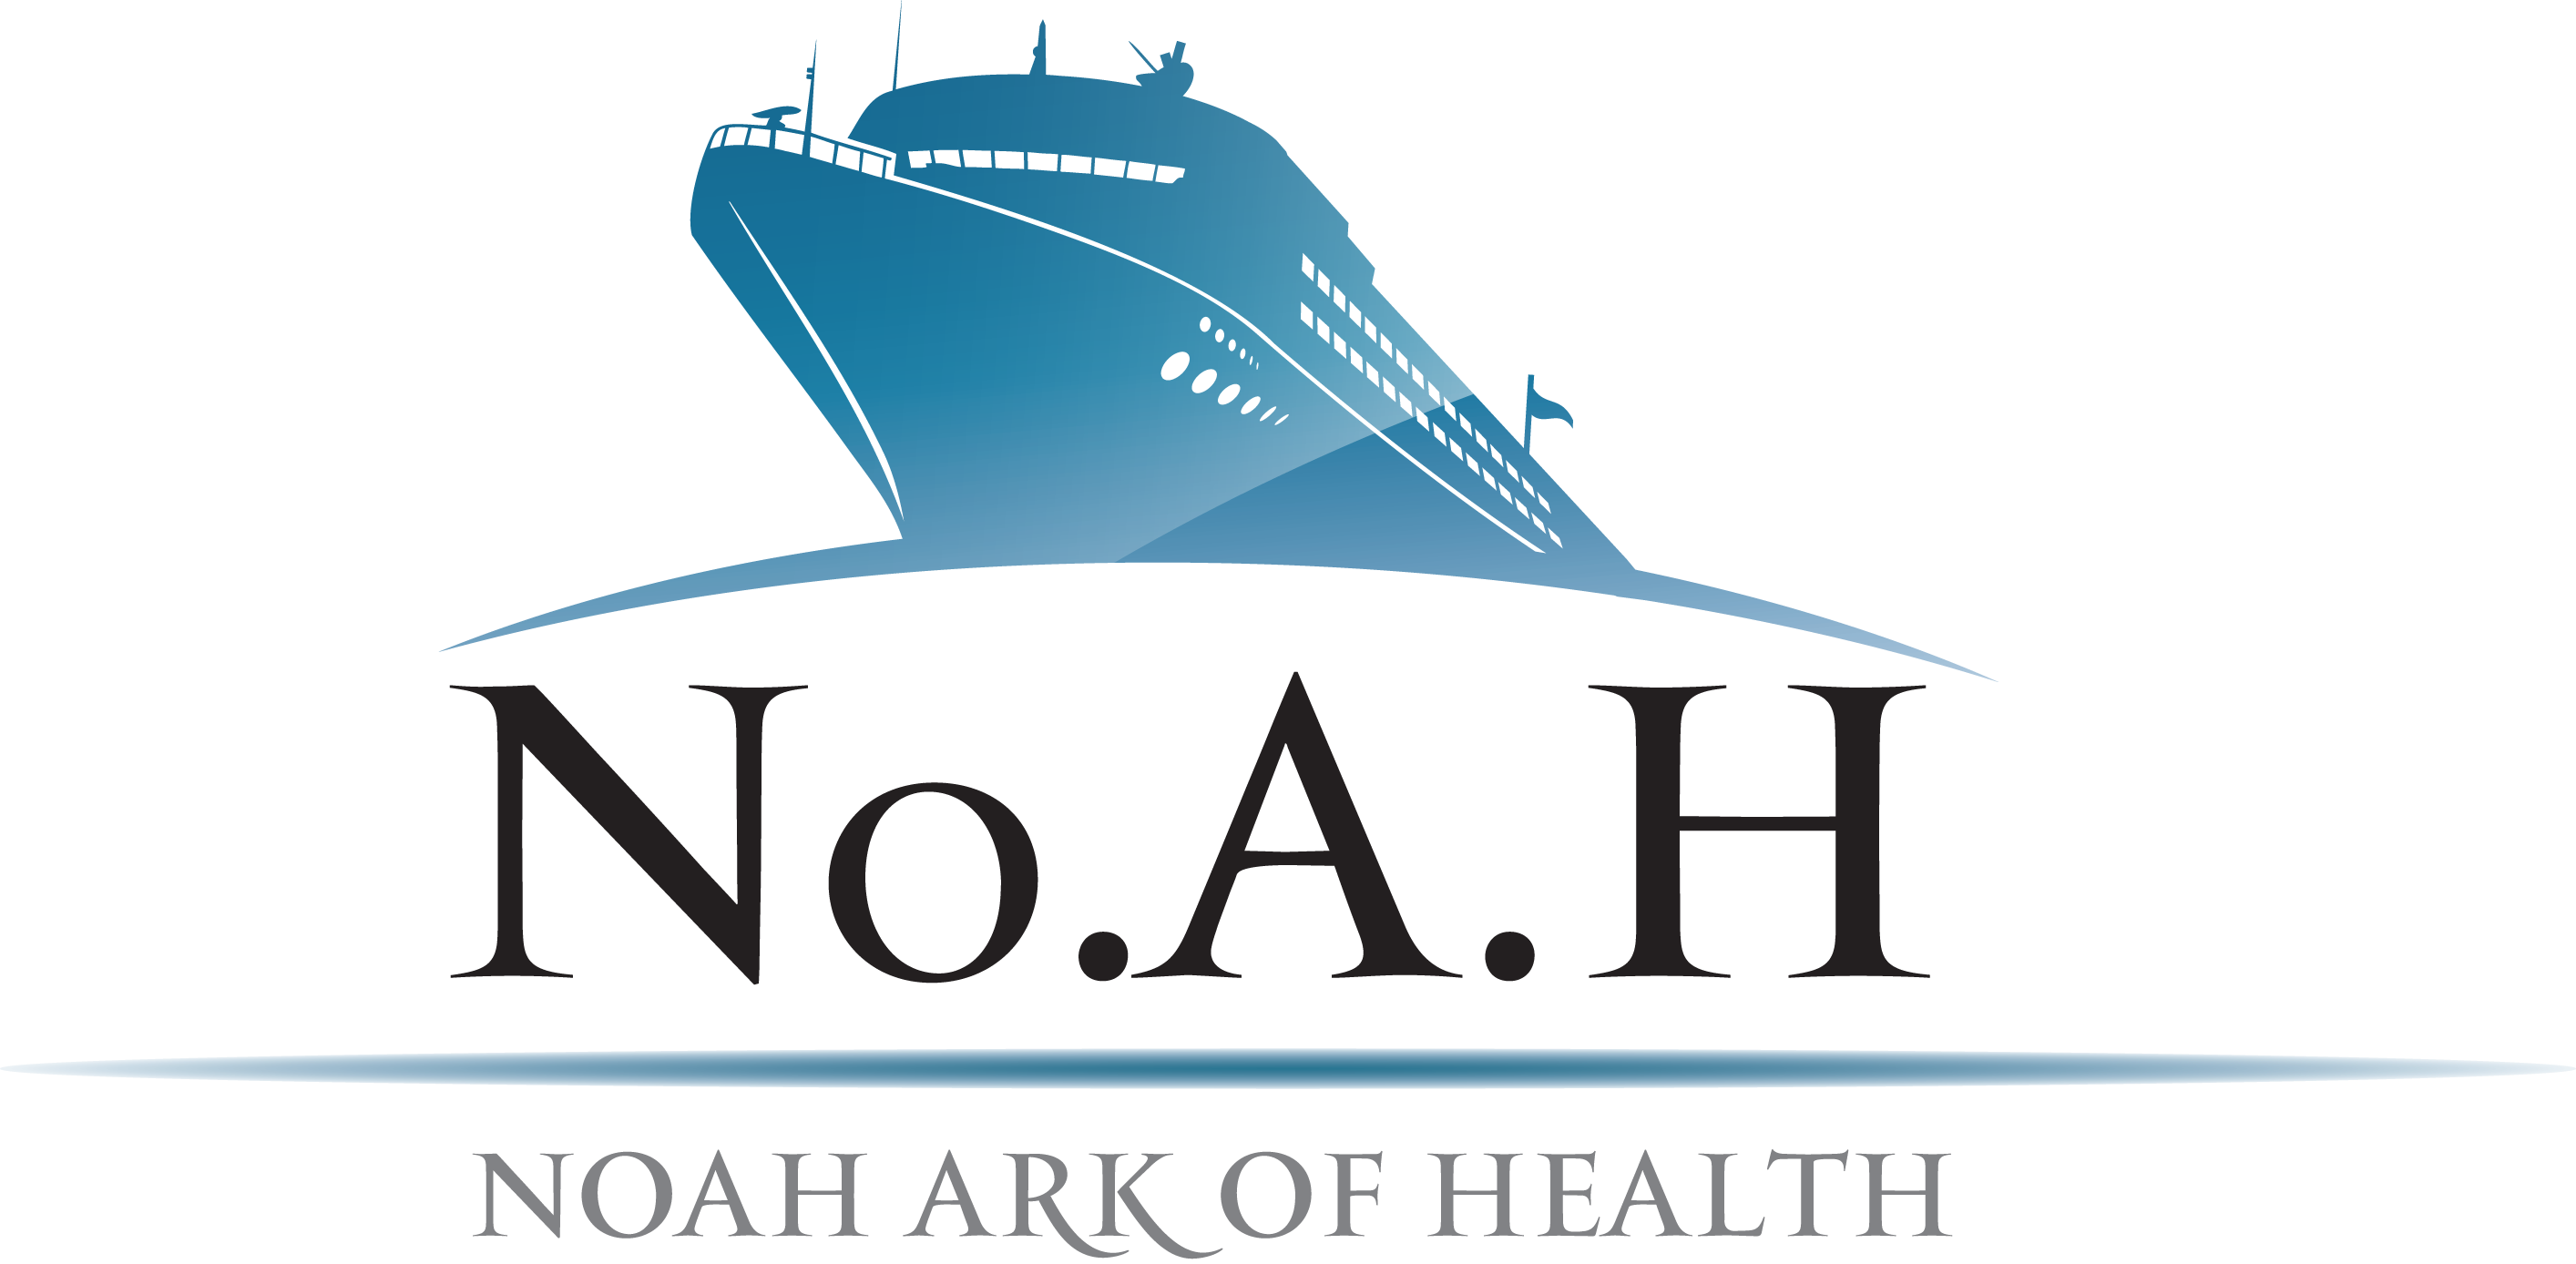 Noah Ark Of Health - Veganism (2828x1388)